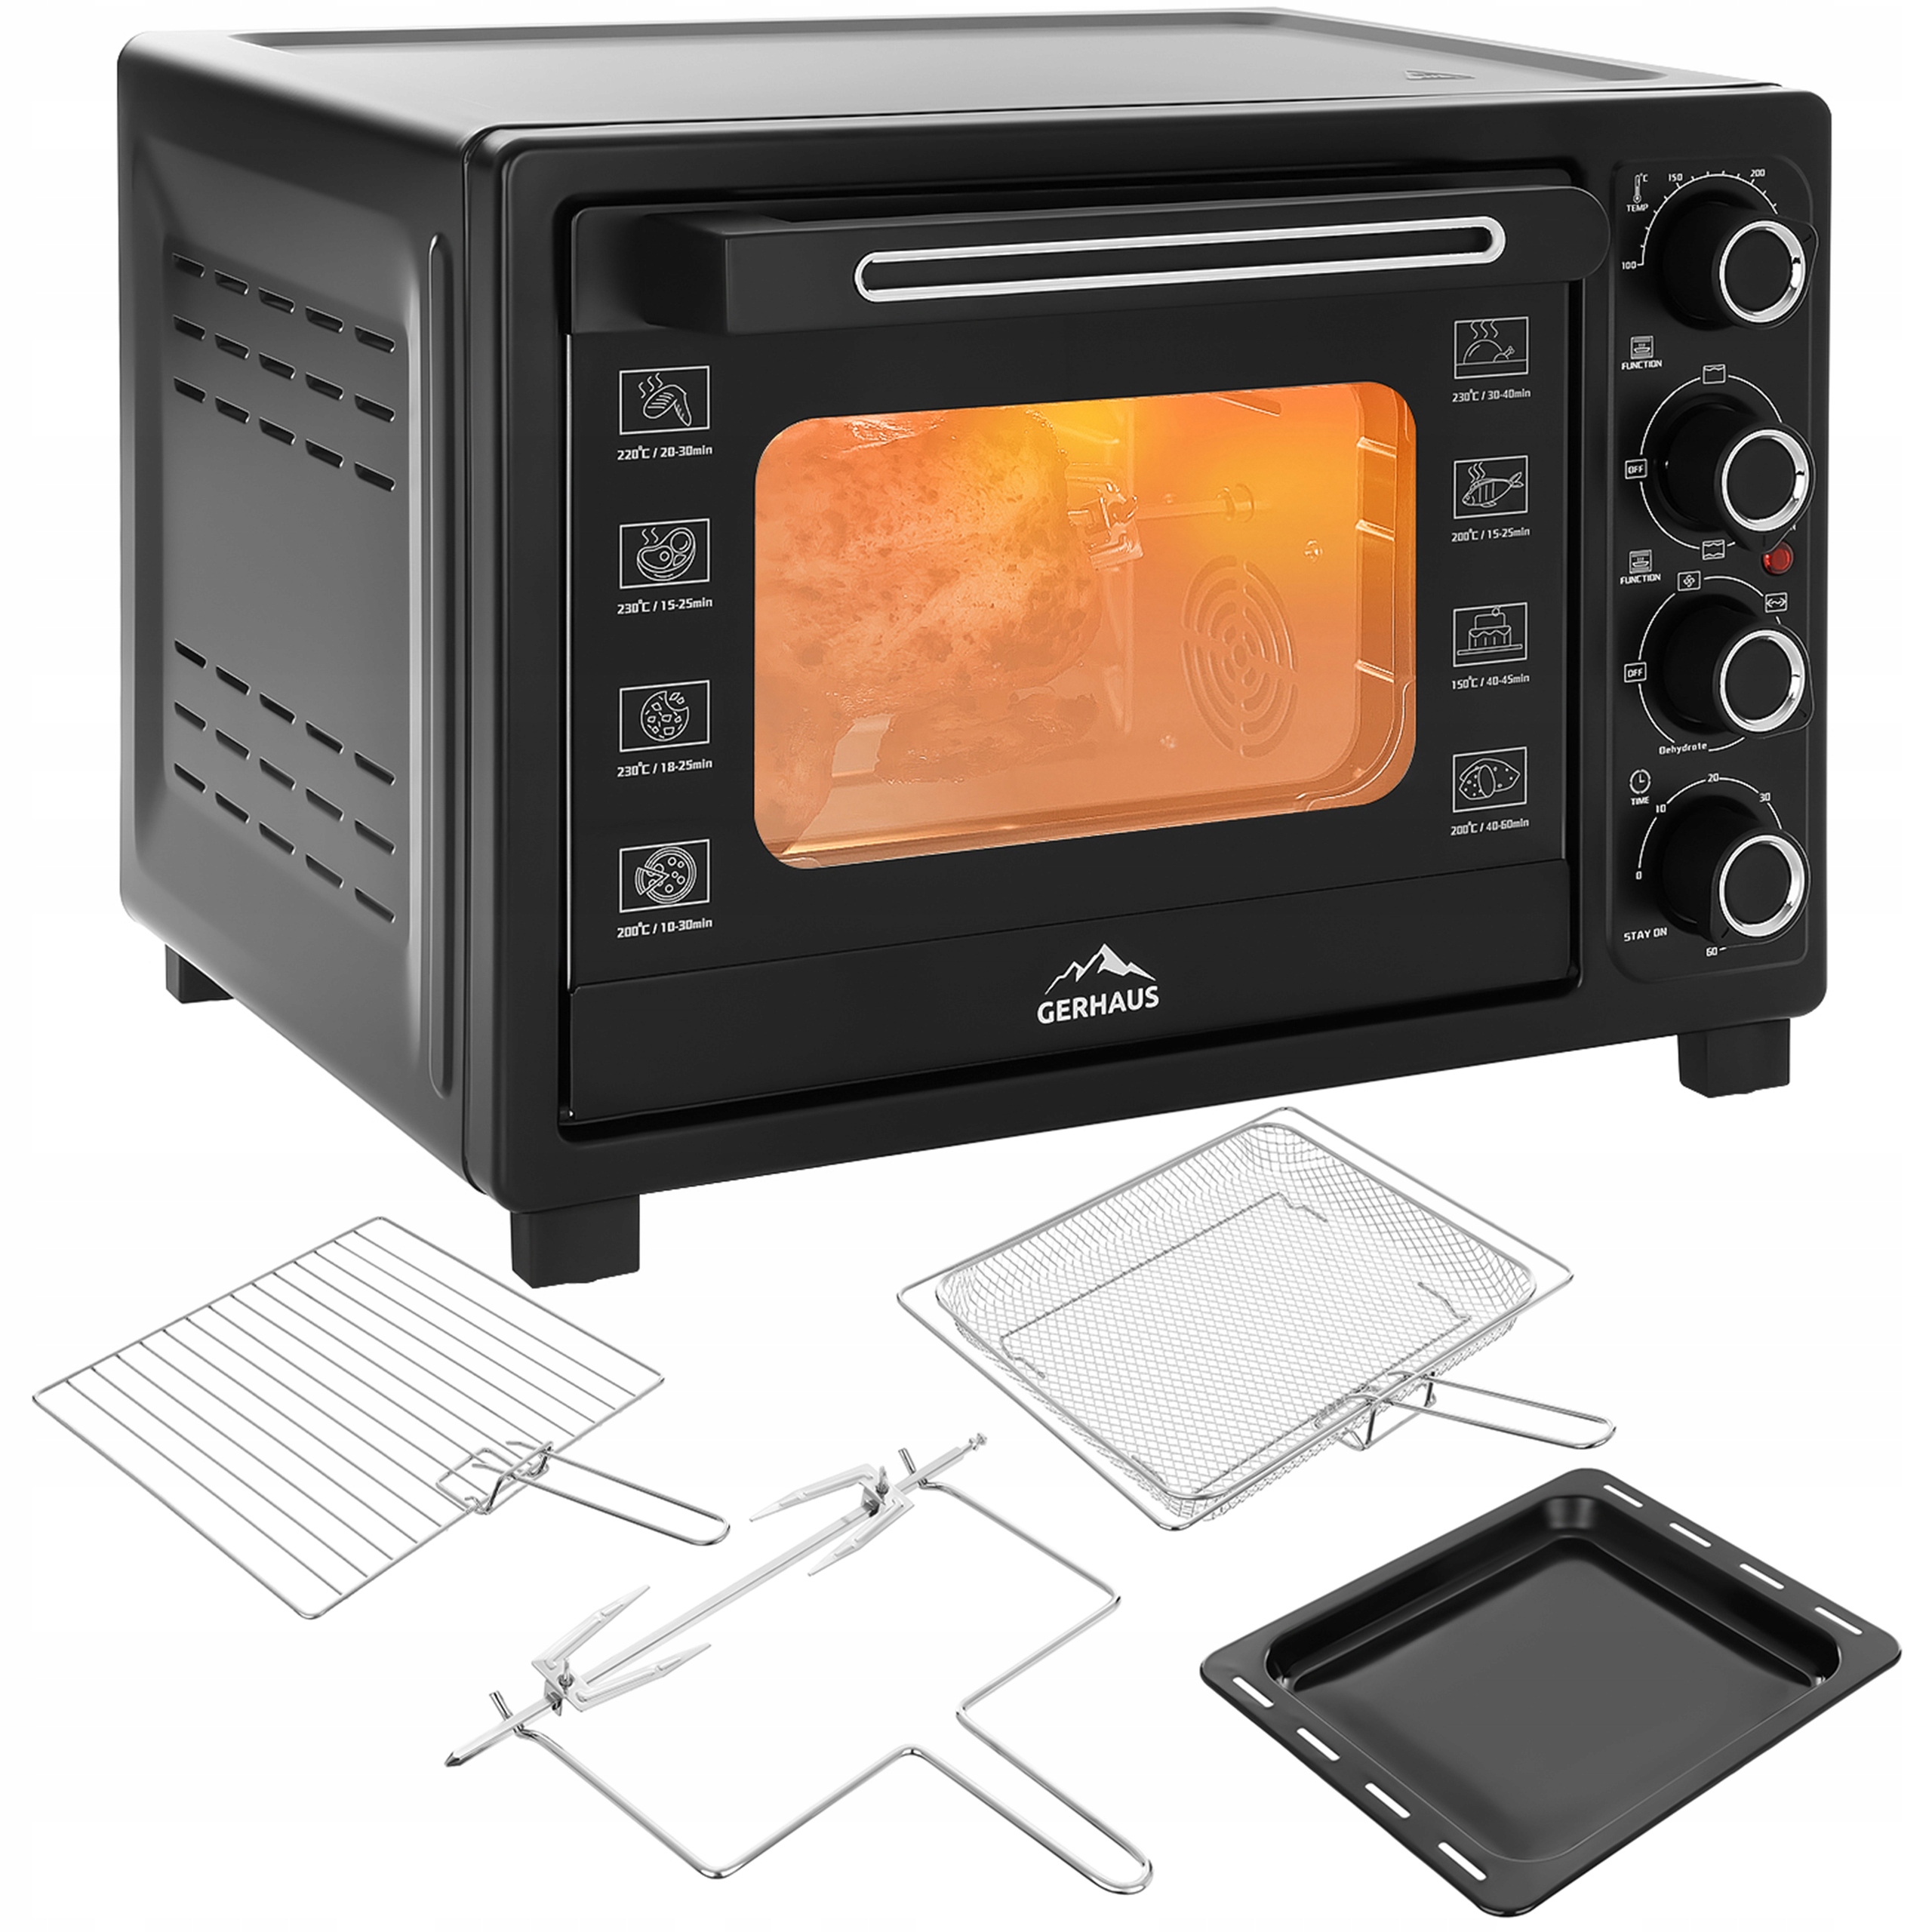 Calmdo AF-120CDEU 1500W 12L Air Fryer Toaster Oven